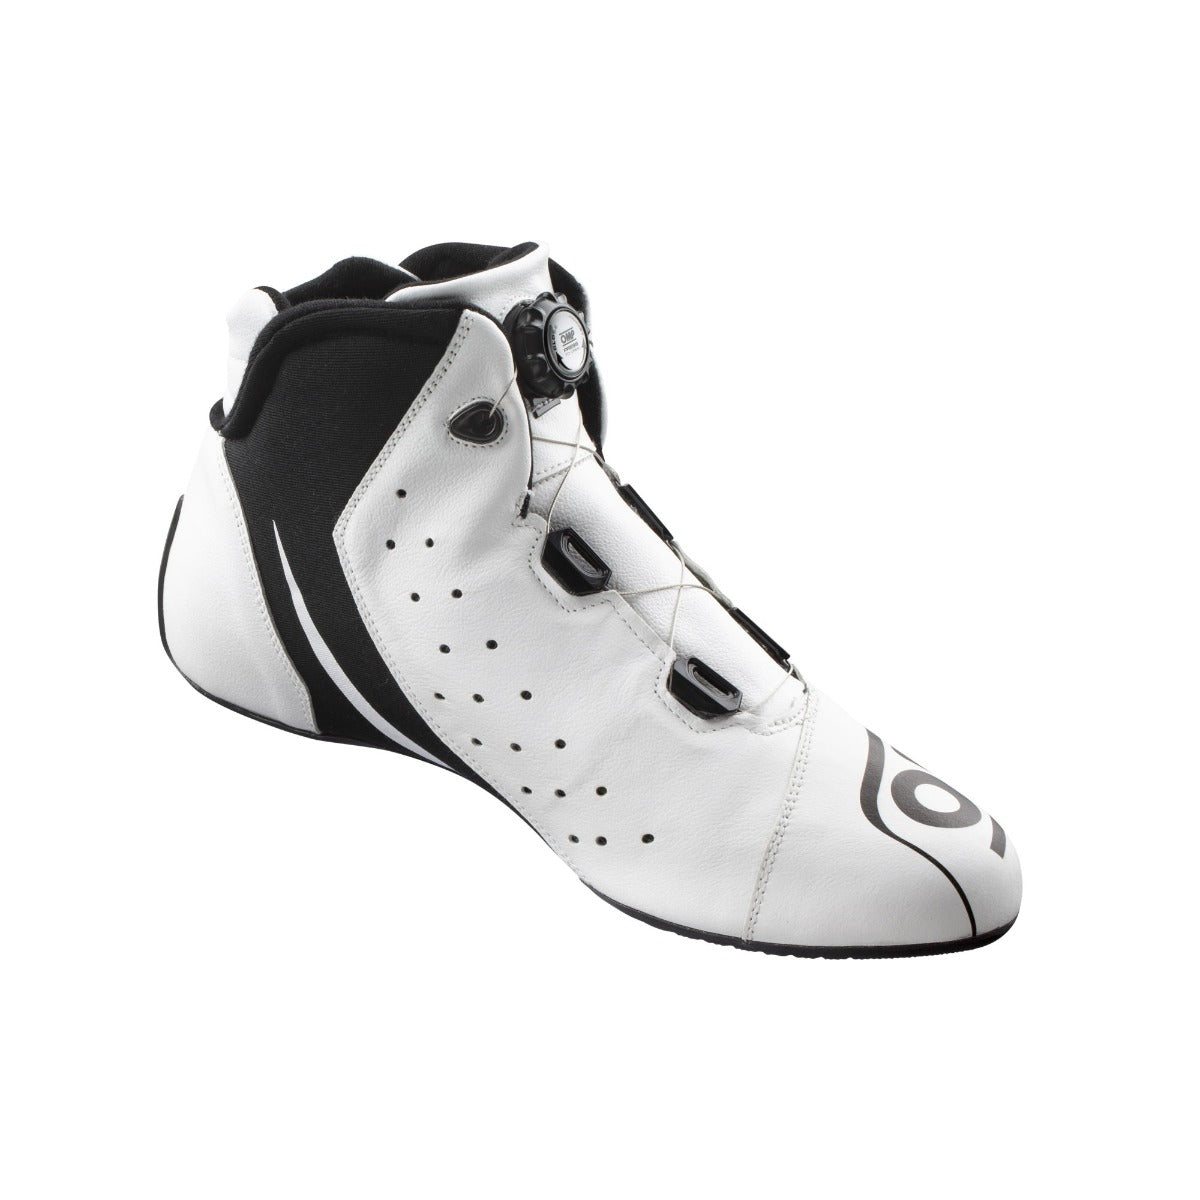 OMP One Evo X R Nomex Race Shoe white